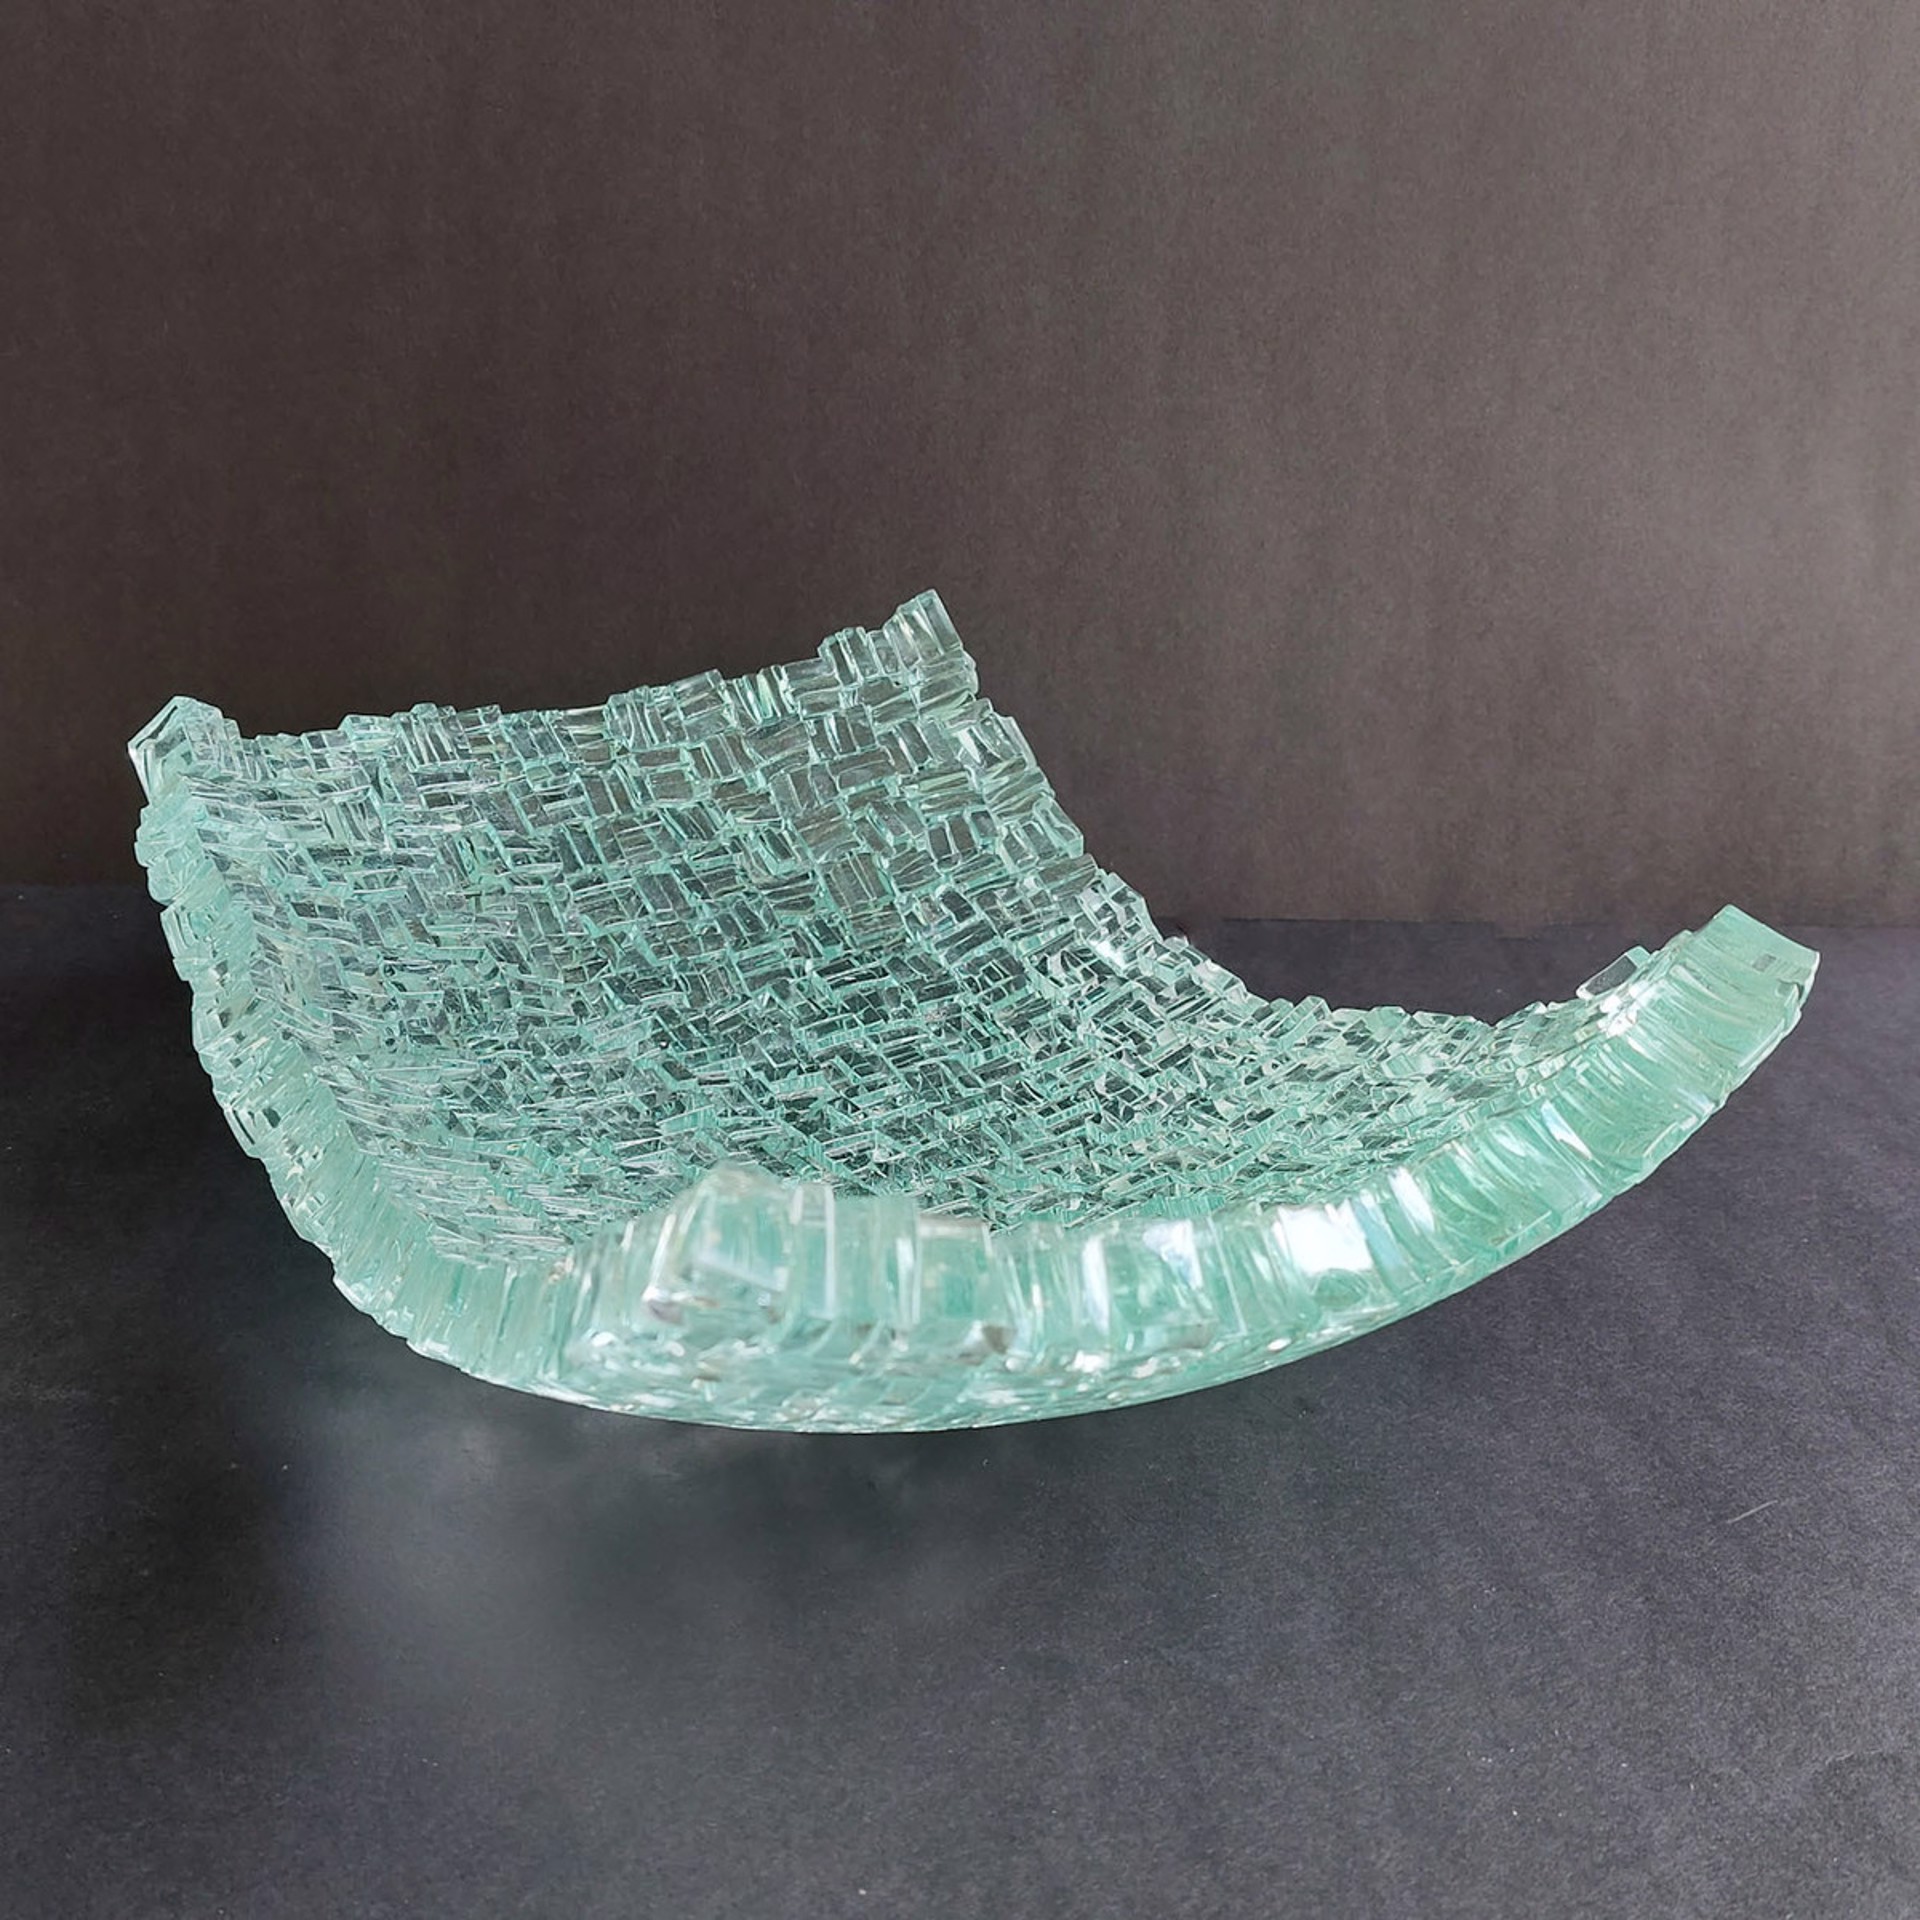 Medium Glass Bowl #2 by Christy Haldane